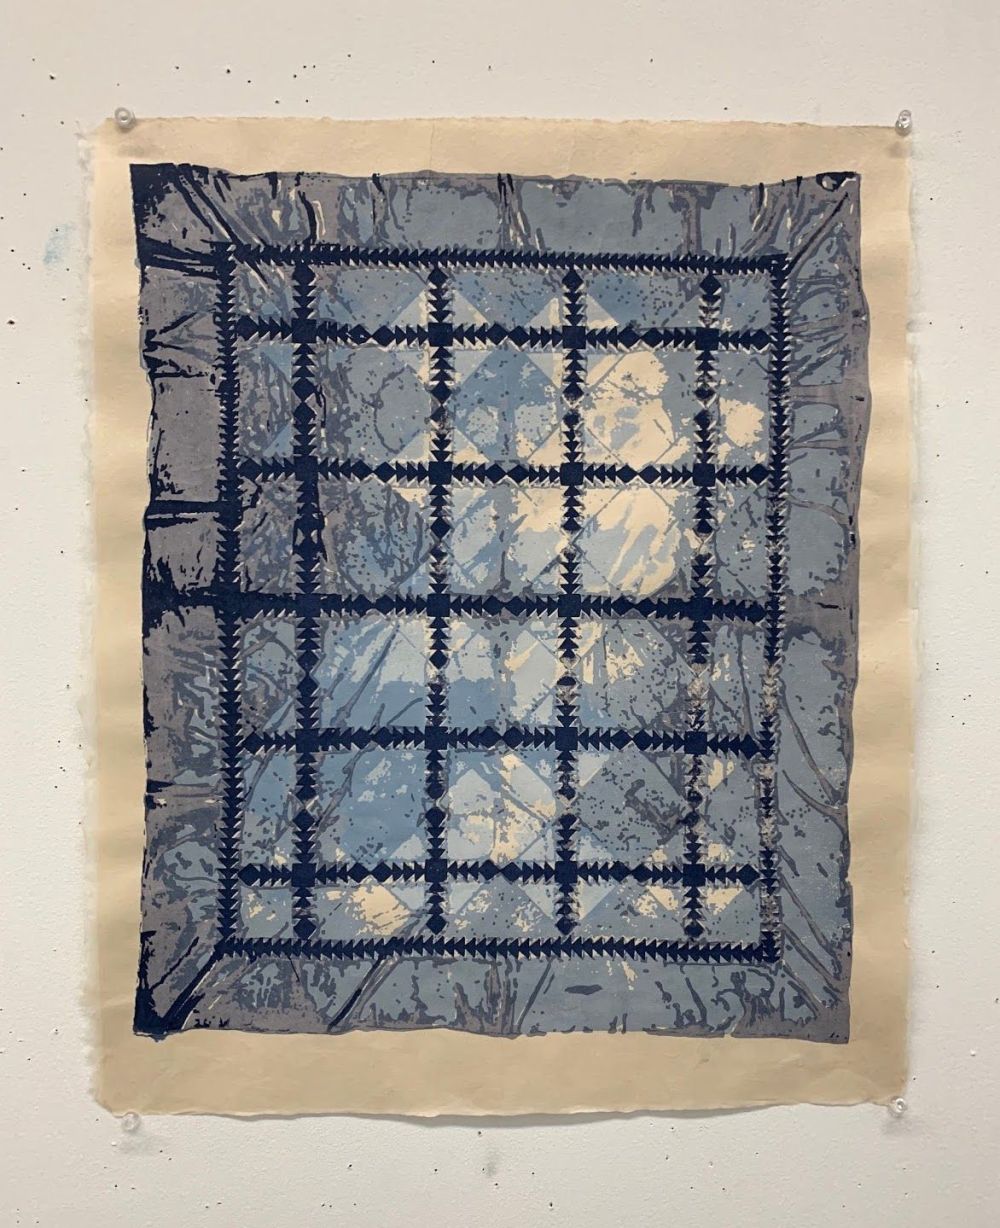 Sam Barron, Quilt, 2020, Four layer silkscreen on Japanese paper, 17 x 21 ©Sam Barron